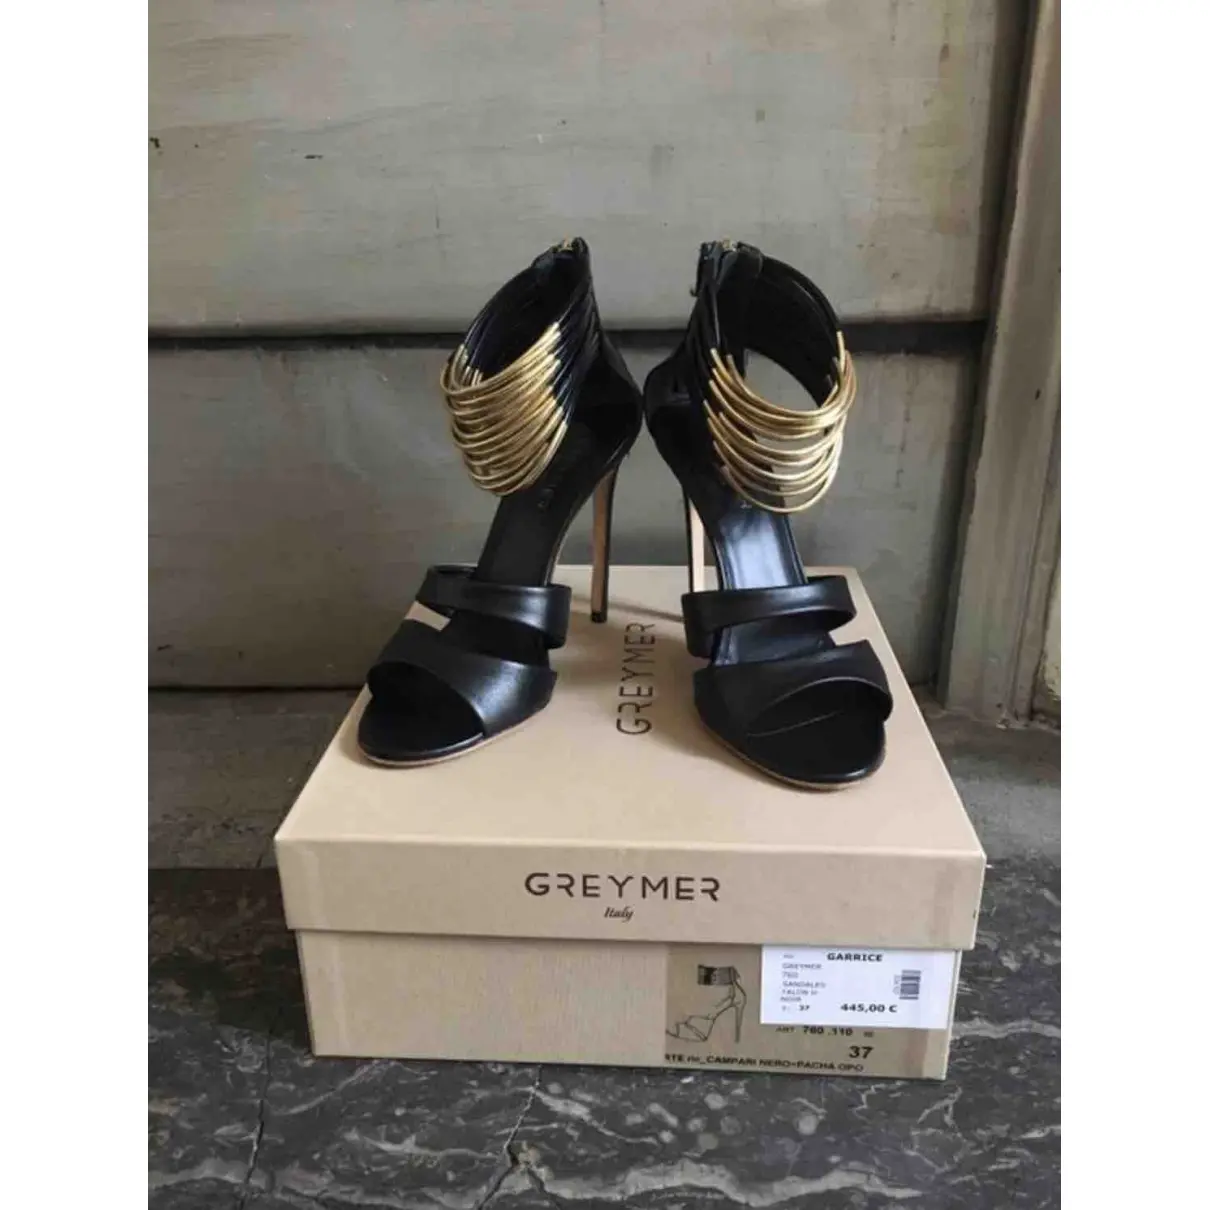 Greymer Leather sandal for sale